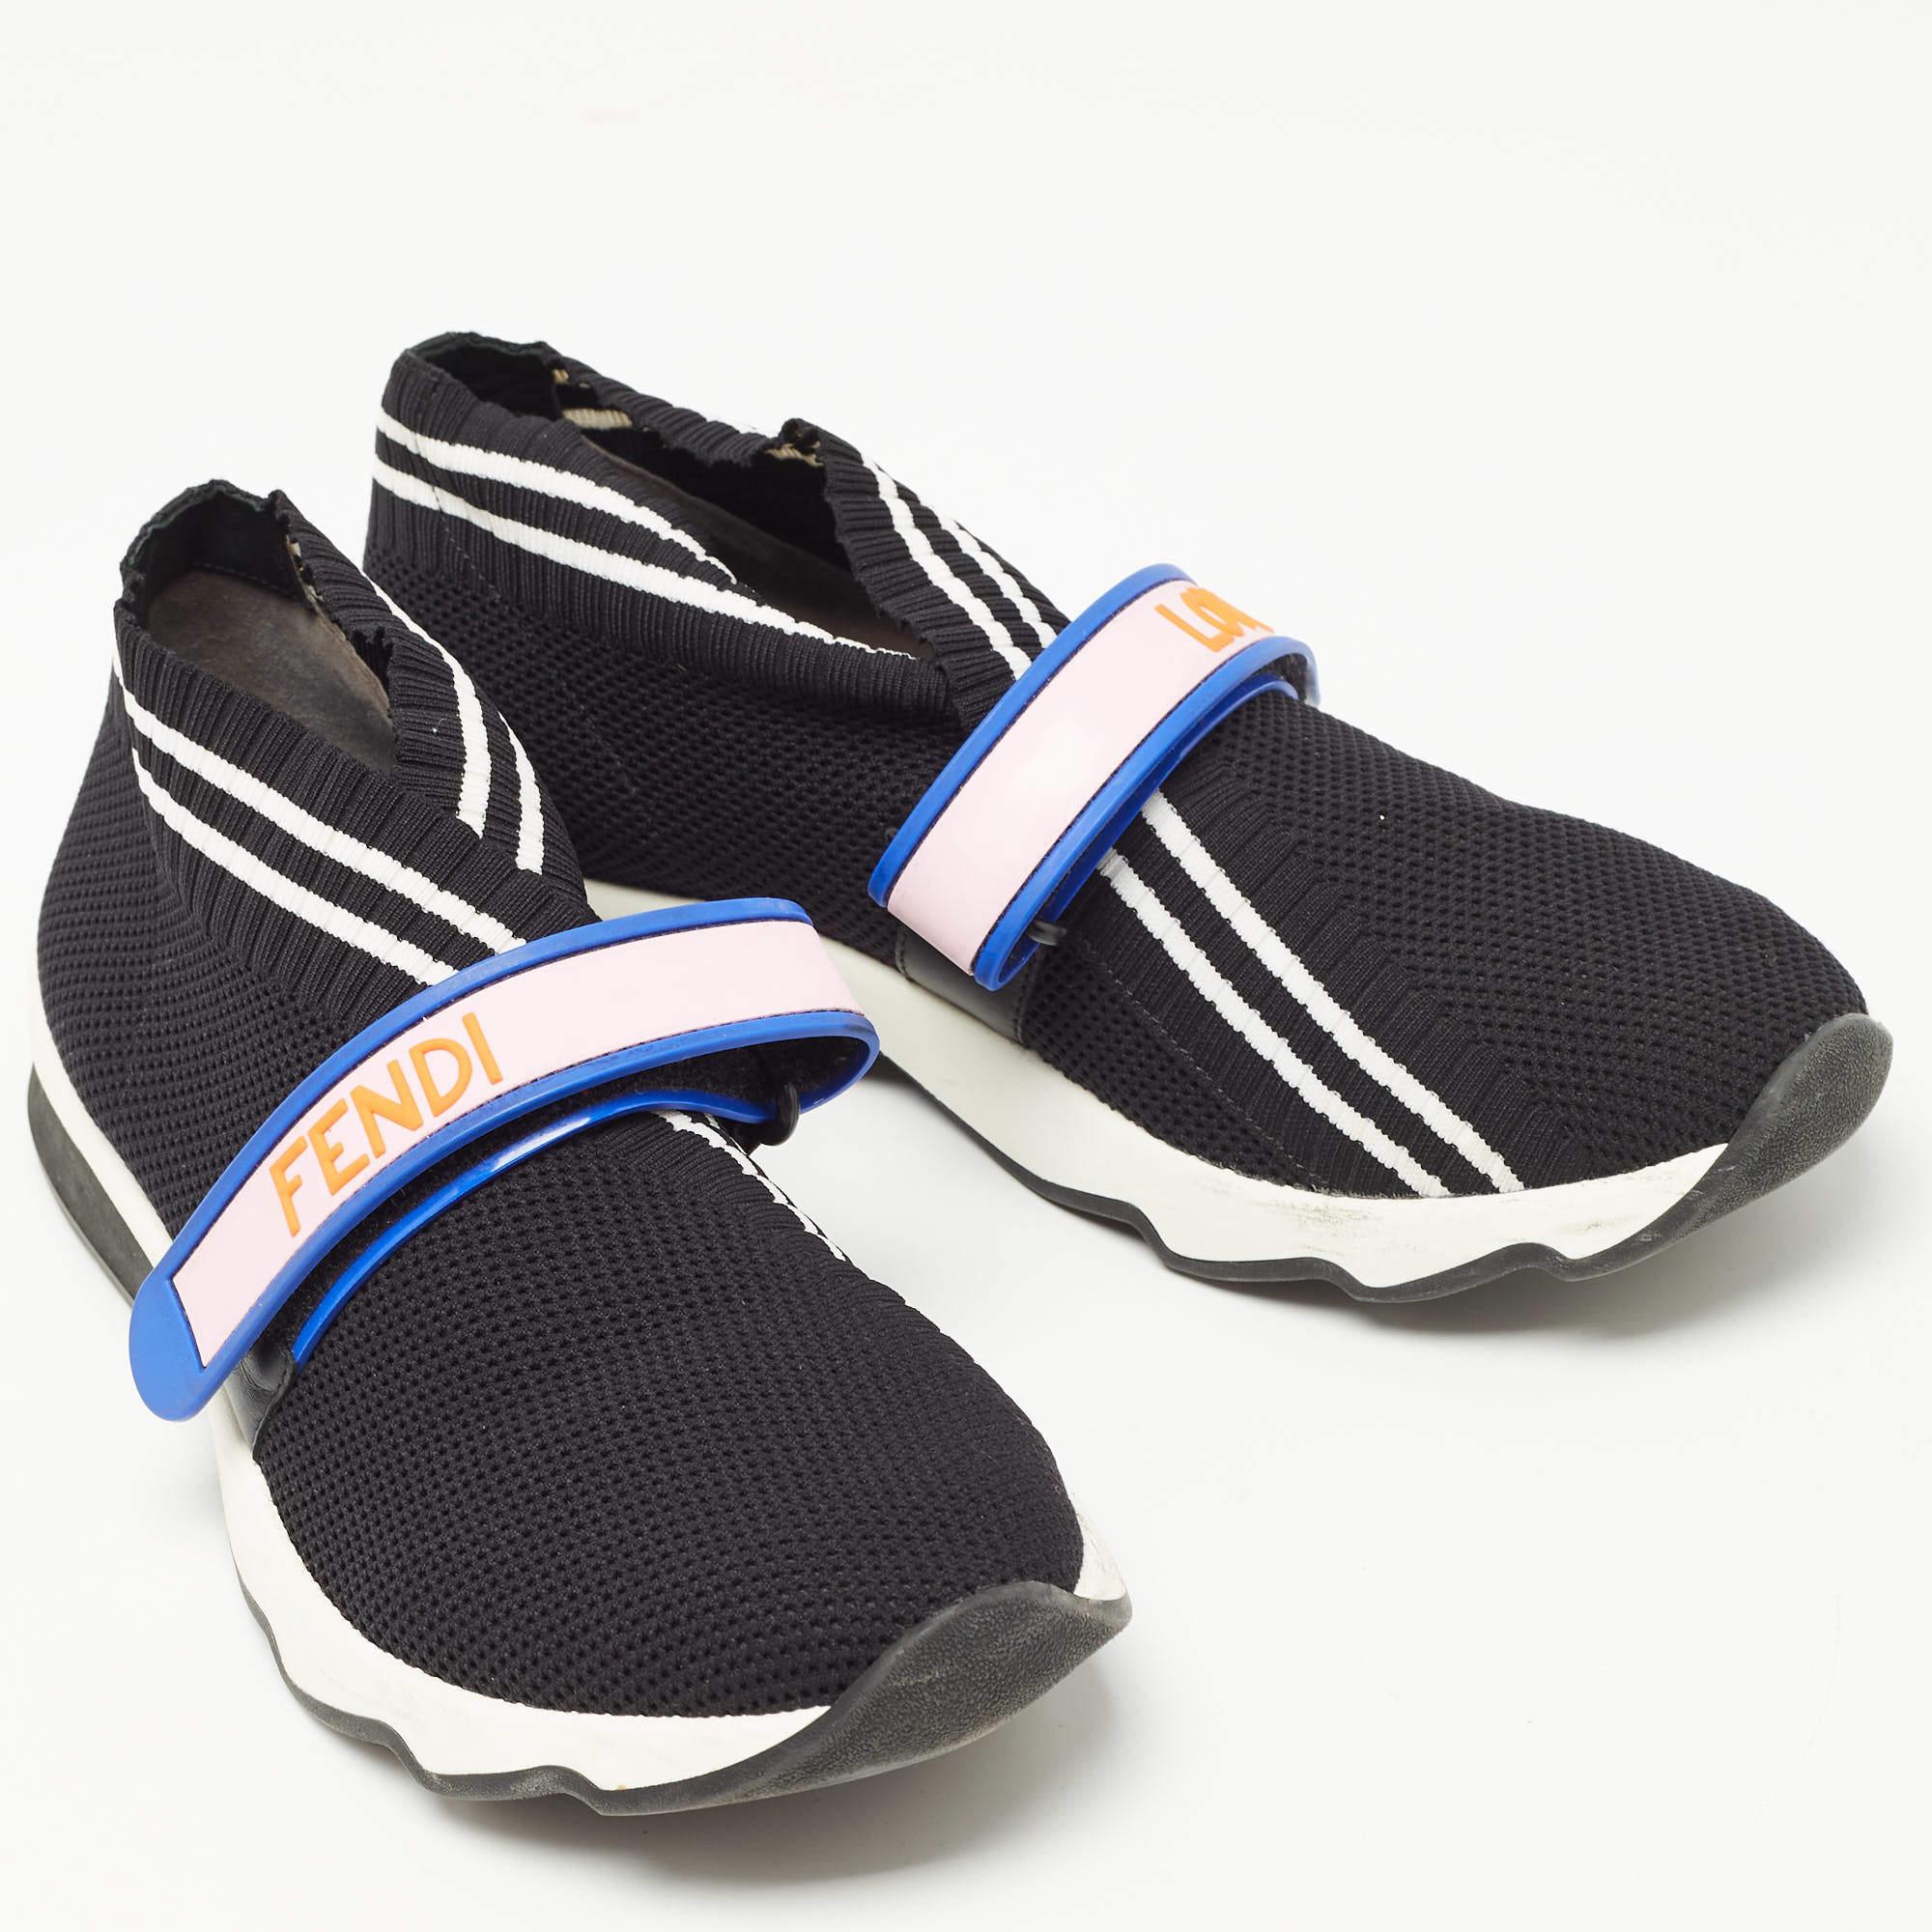 Fendi Black Knit Fabric Rockoko Mismatch Sneakers Size 41 In Good Condition For Sale In Dubai, Al Qouz 2